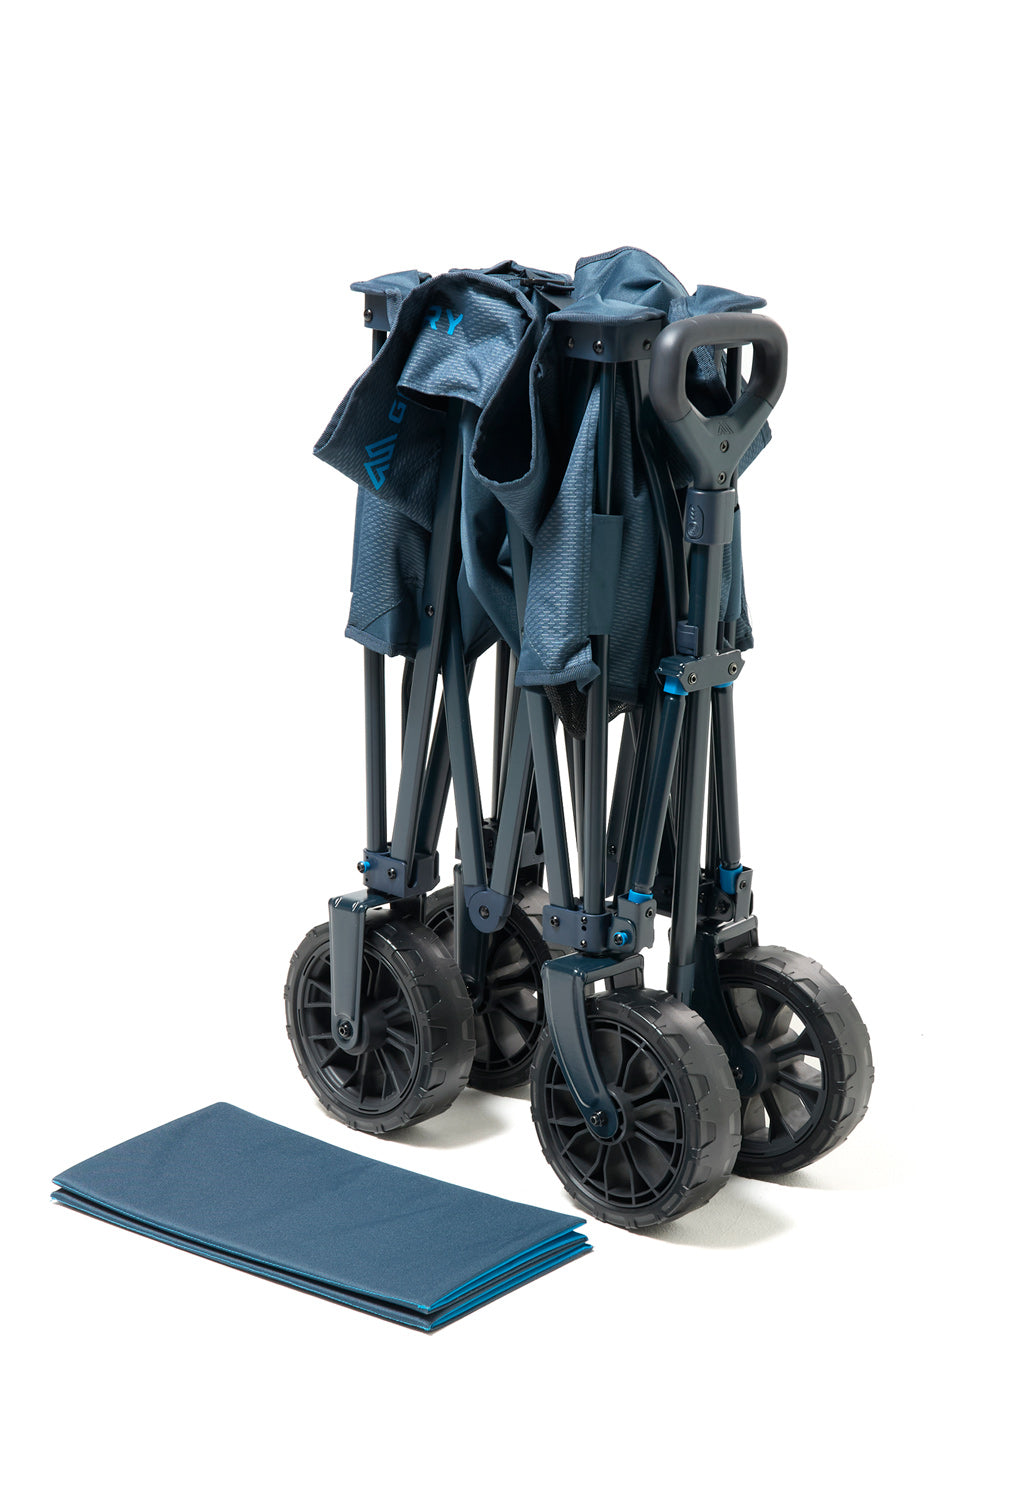 Gregory Alpaca Gear Wagon - Slate Blue